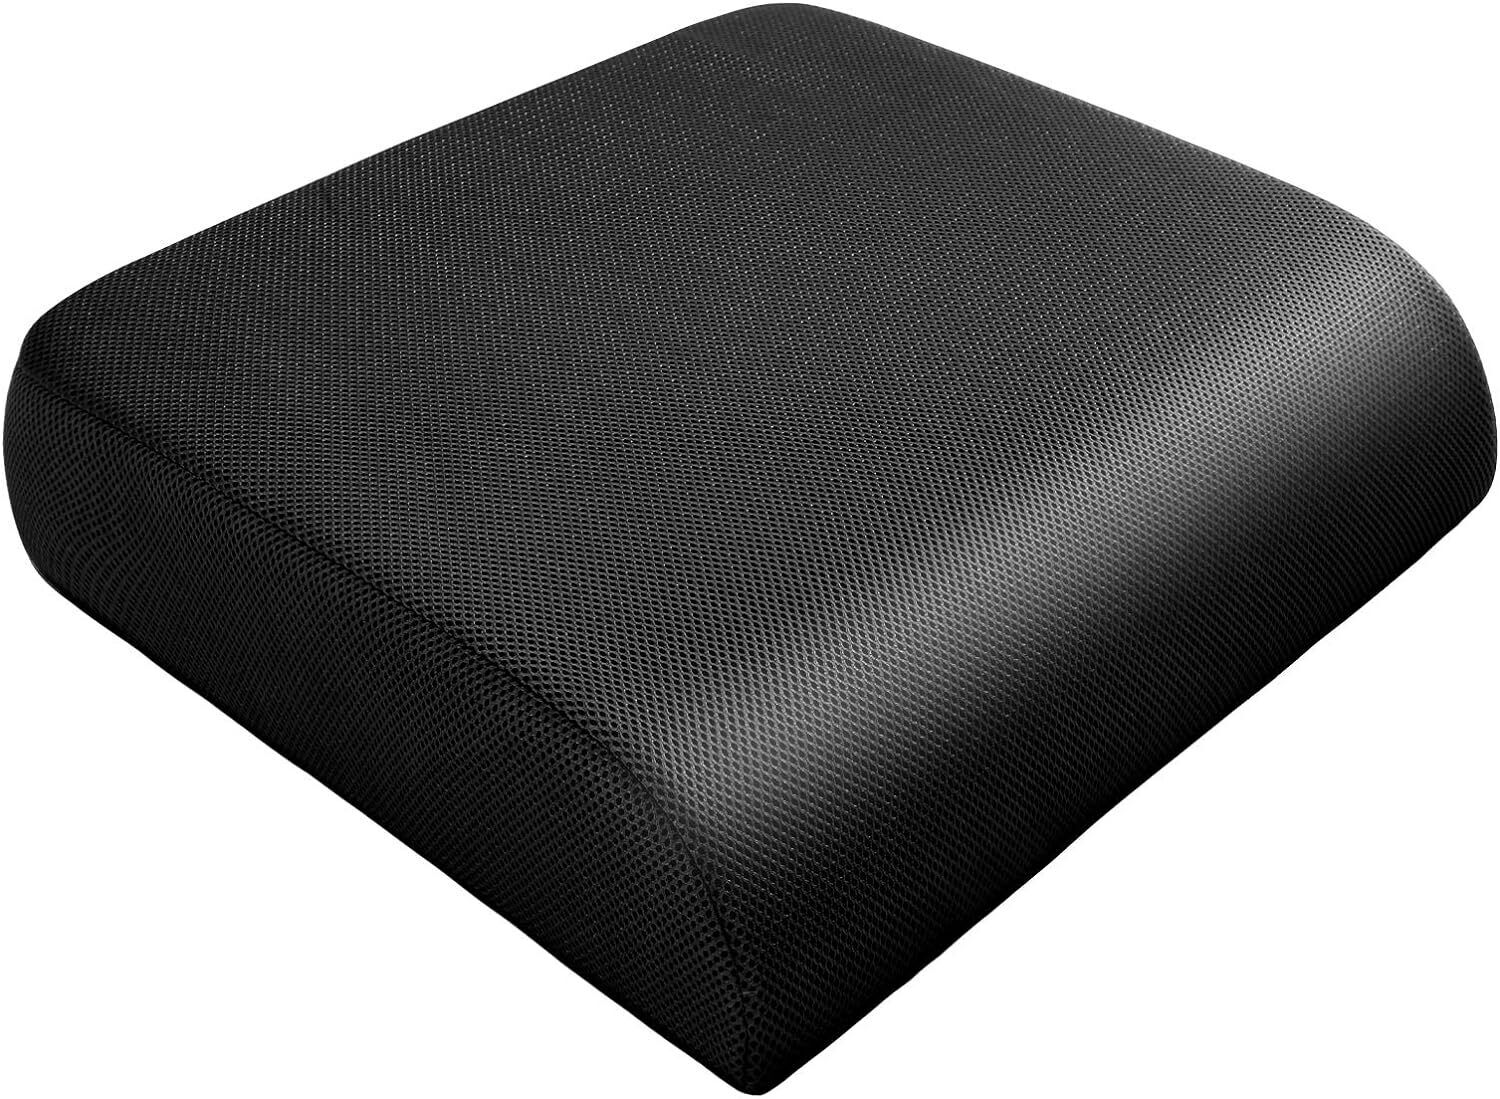 Extra Thick Large Seat Cushion -19 X 17.5 X 4 Inch Gel Memory Foam Cushion 